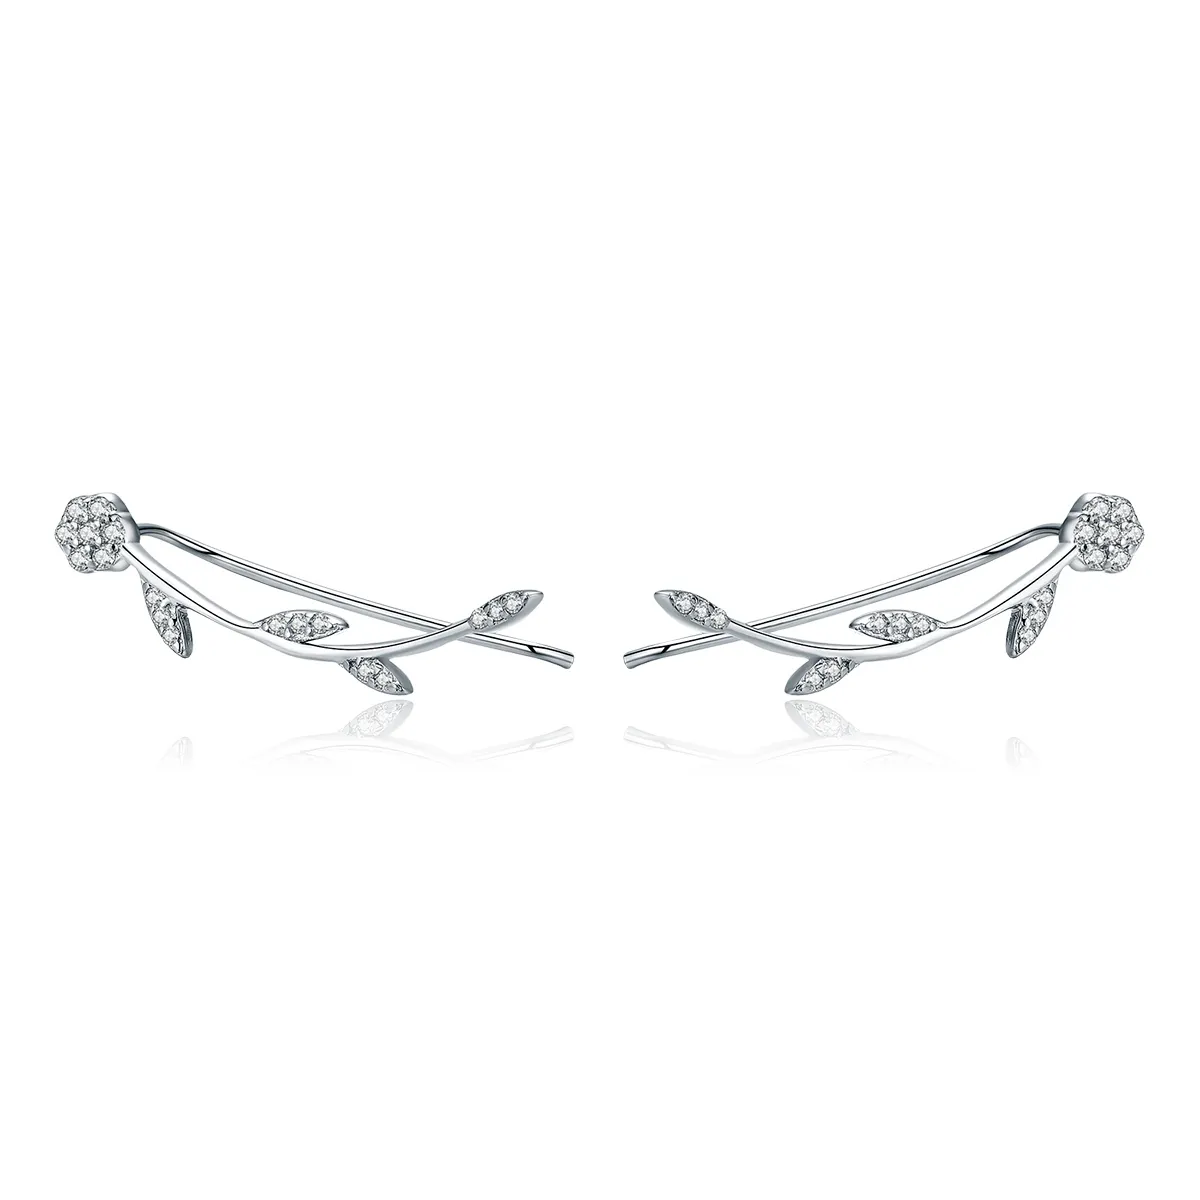 Pandora Style Silver Shinning Leaves Stud Earrings - SCE266